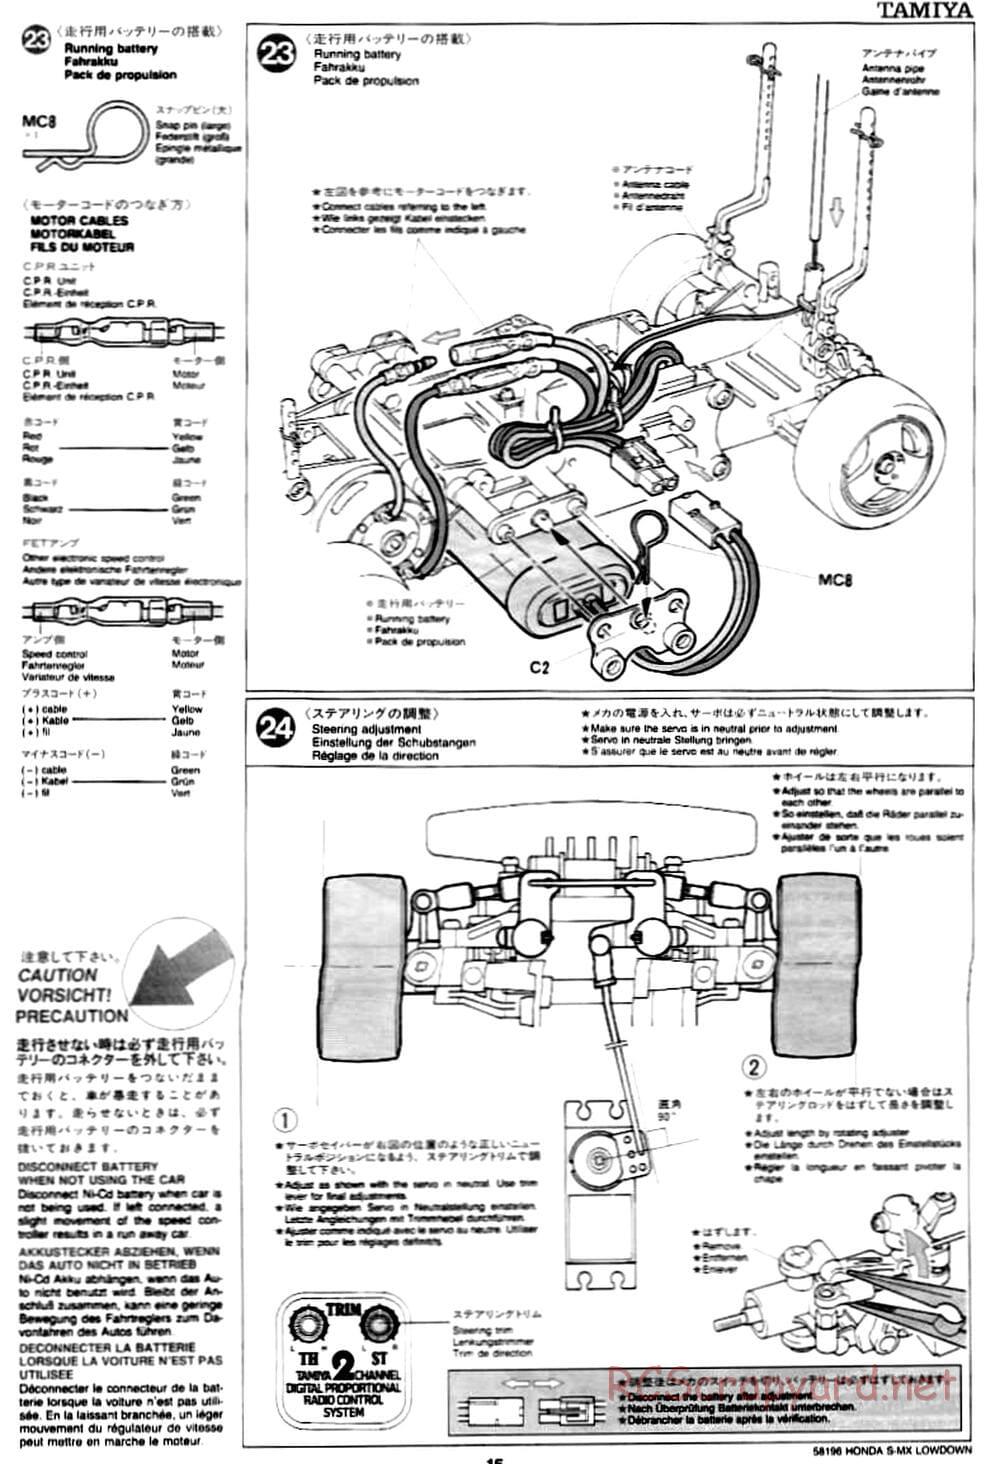 Tamiya - Honda S-MX Lowdown - M01 Chassis - Manual - Page 15